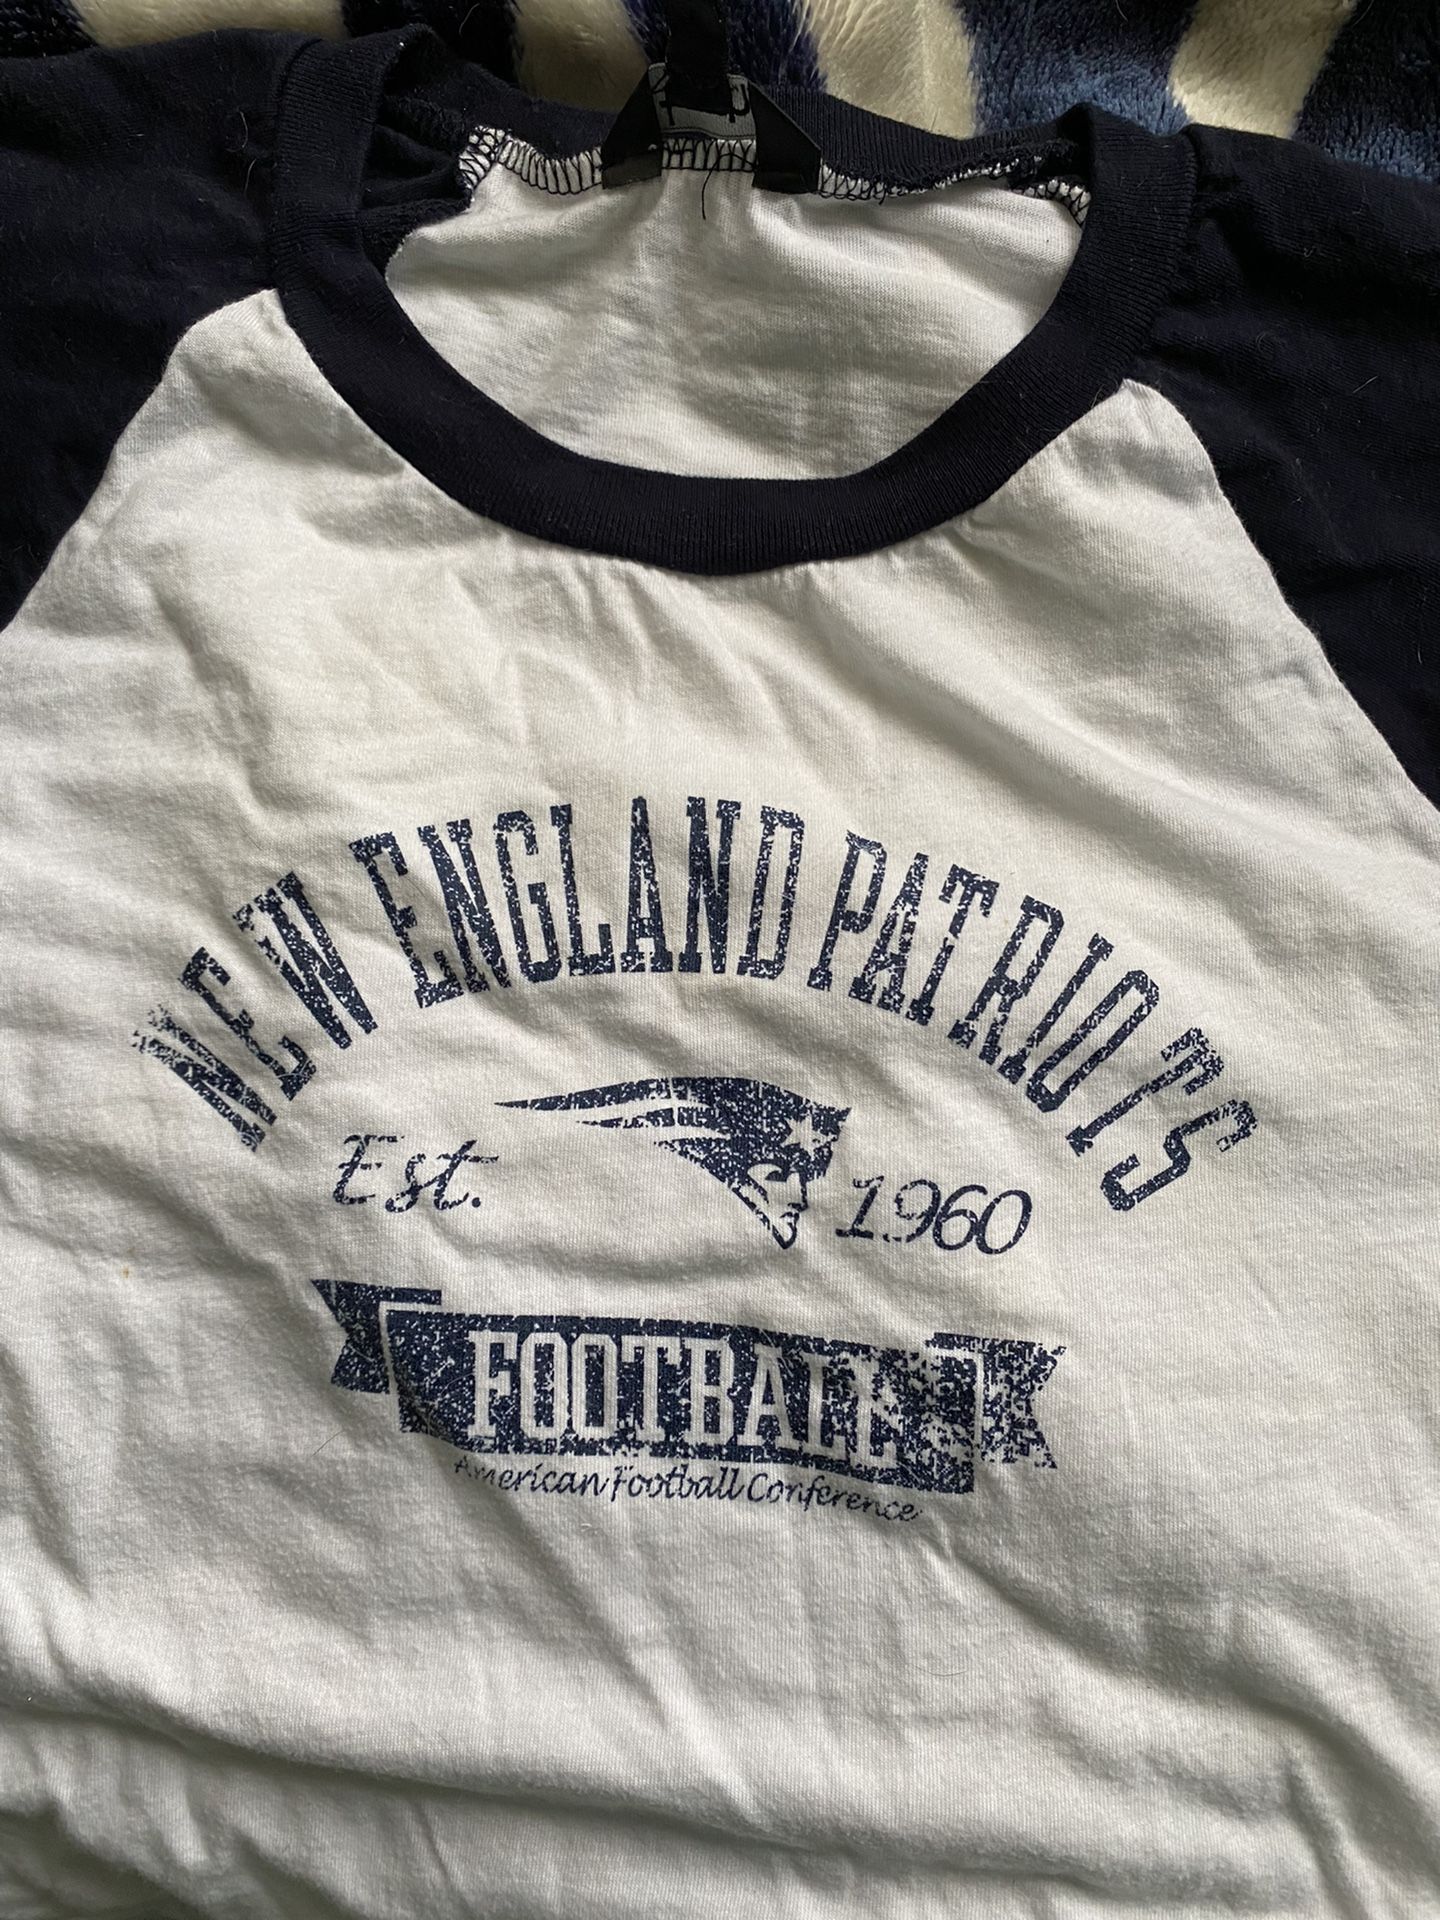 New England patriots shirt